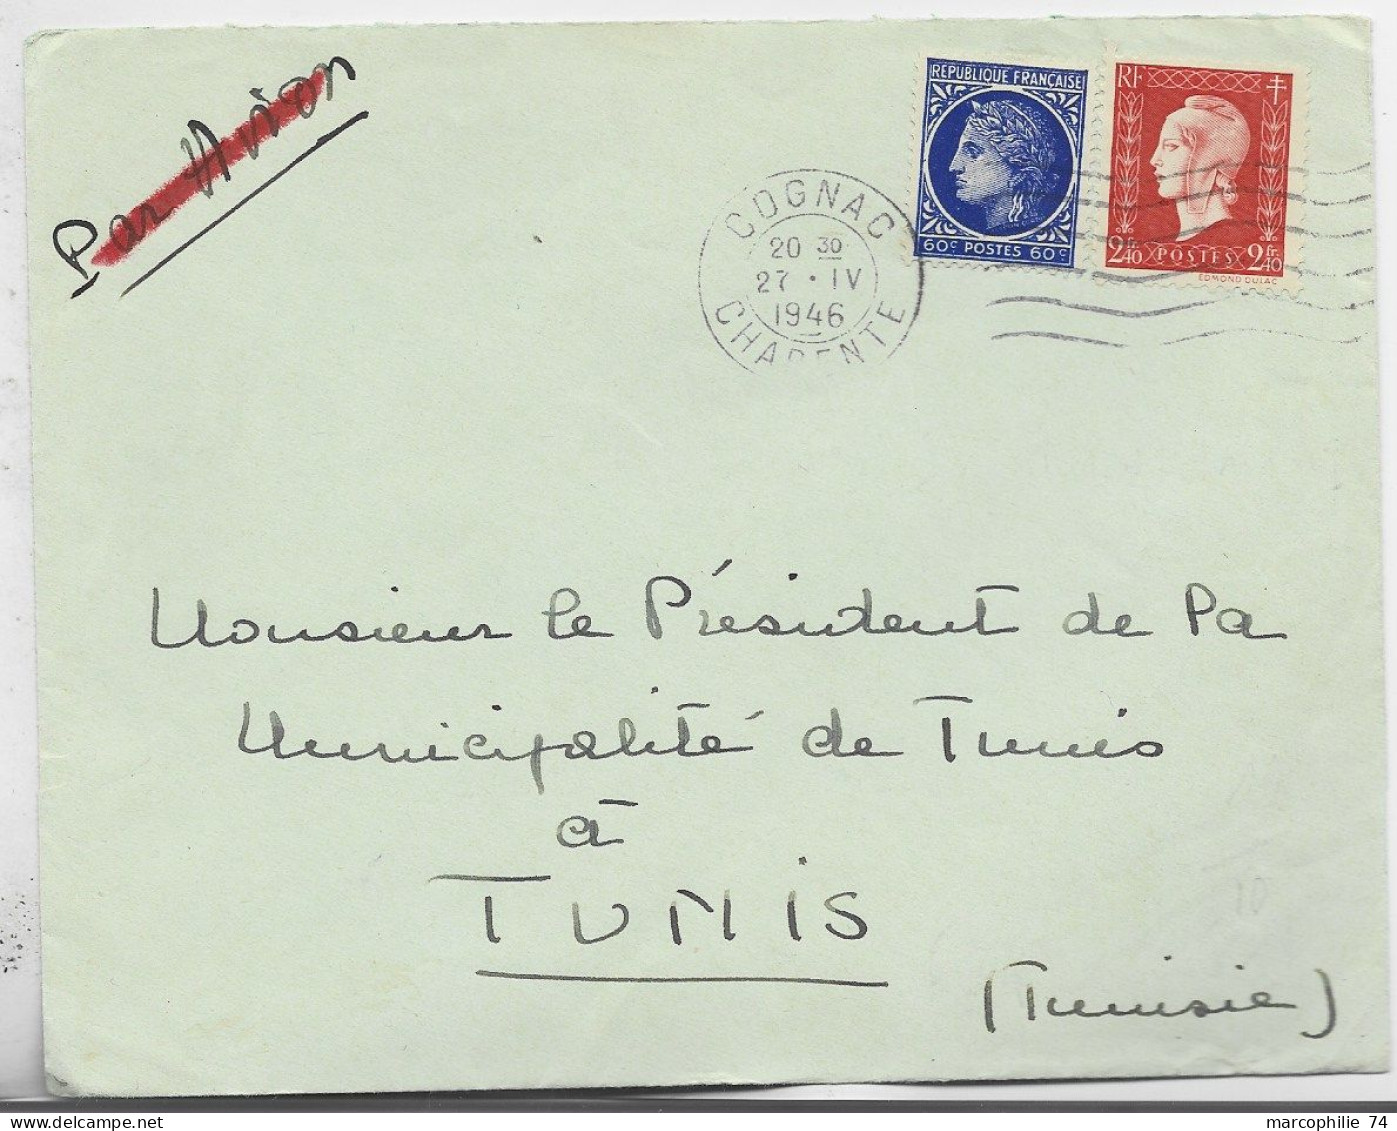 FRANCE DULAC 2FR40 +60C MAZELIN LETTRE COVER CHARENTE 27.IV.1946 POUR TUNISIE AU TARIF - 1944-45 Marianne (Dulac)